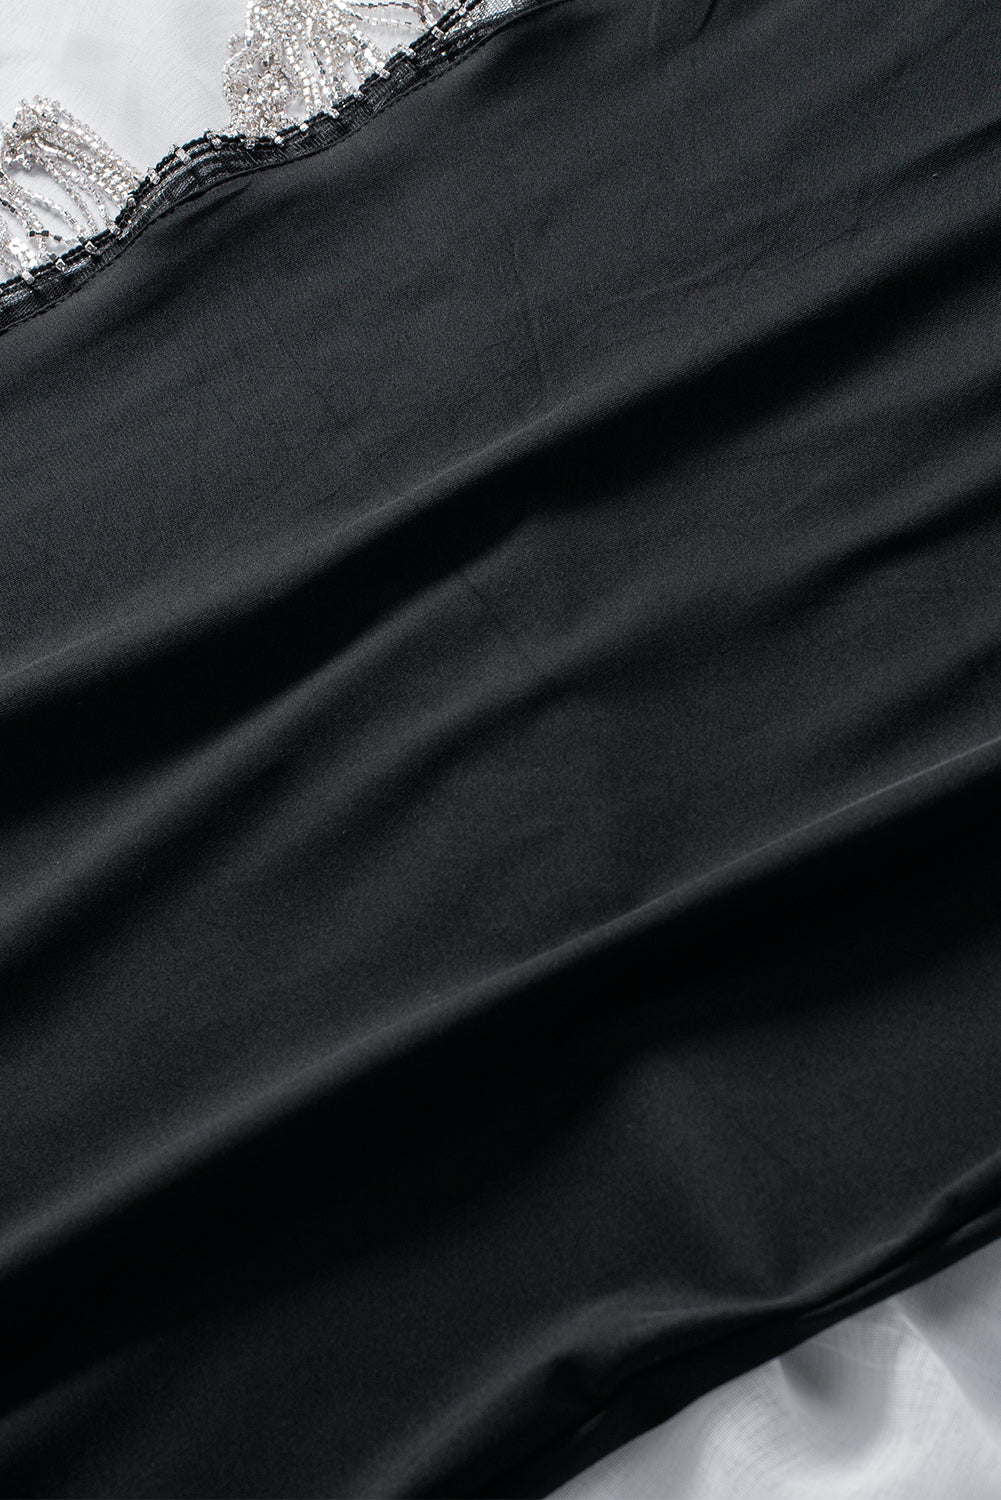 Black Sexy Cut Out Dress Rhinestone Tassel Maxi Dress with Side Slit LC618109-2